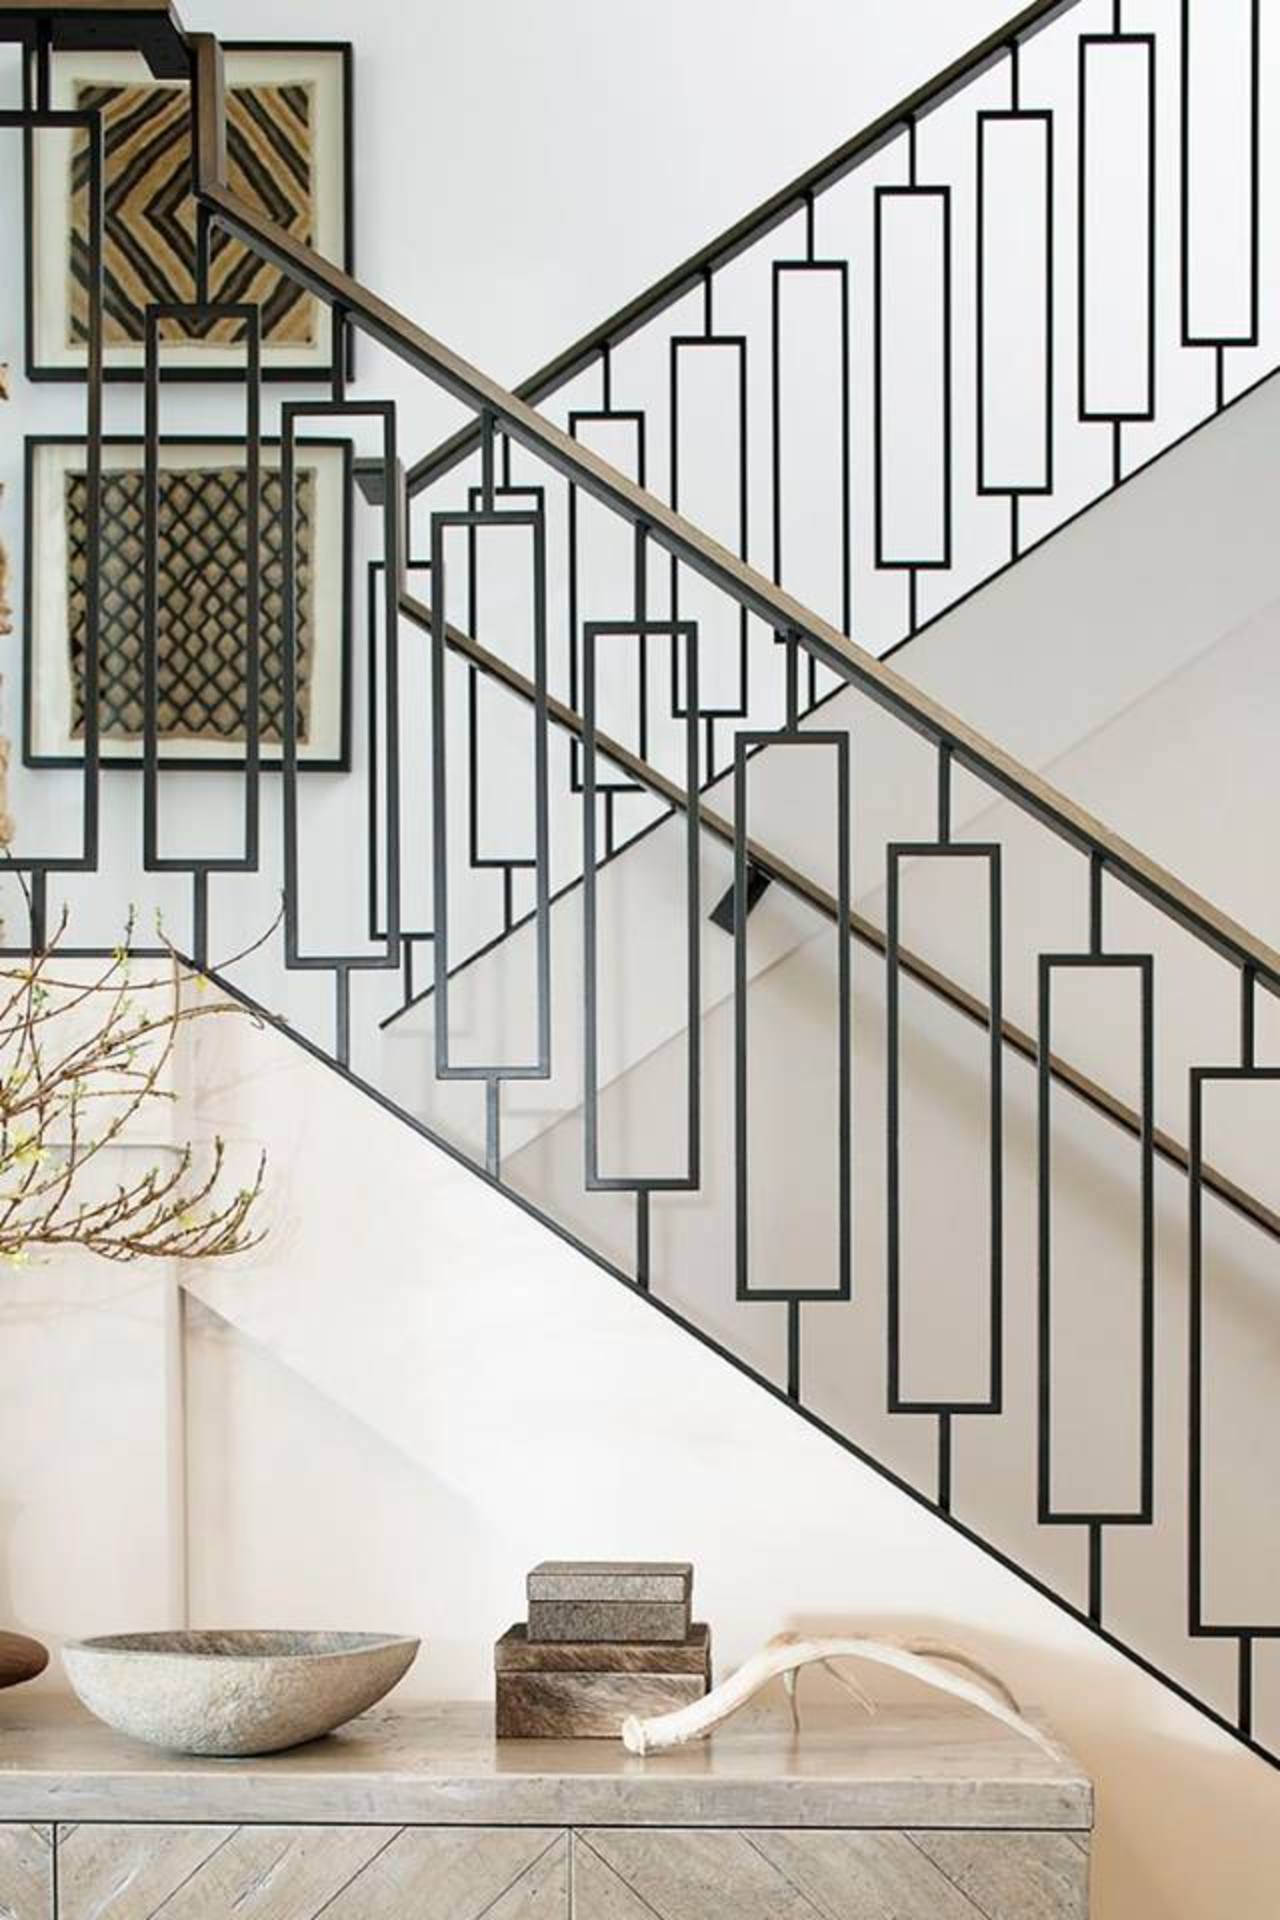 #interior #design #architectural #element #staircase https://t.co/oszDtezIfu